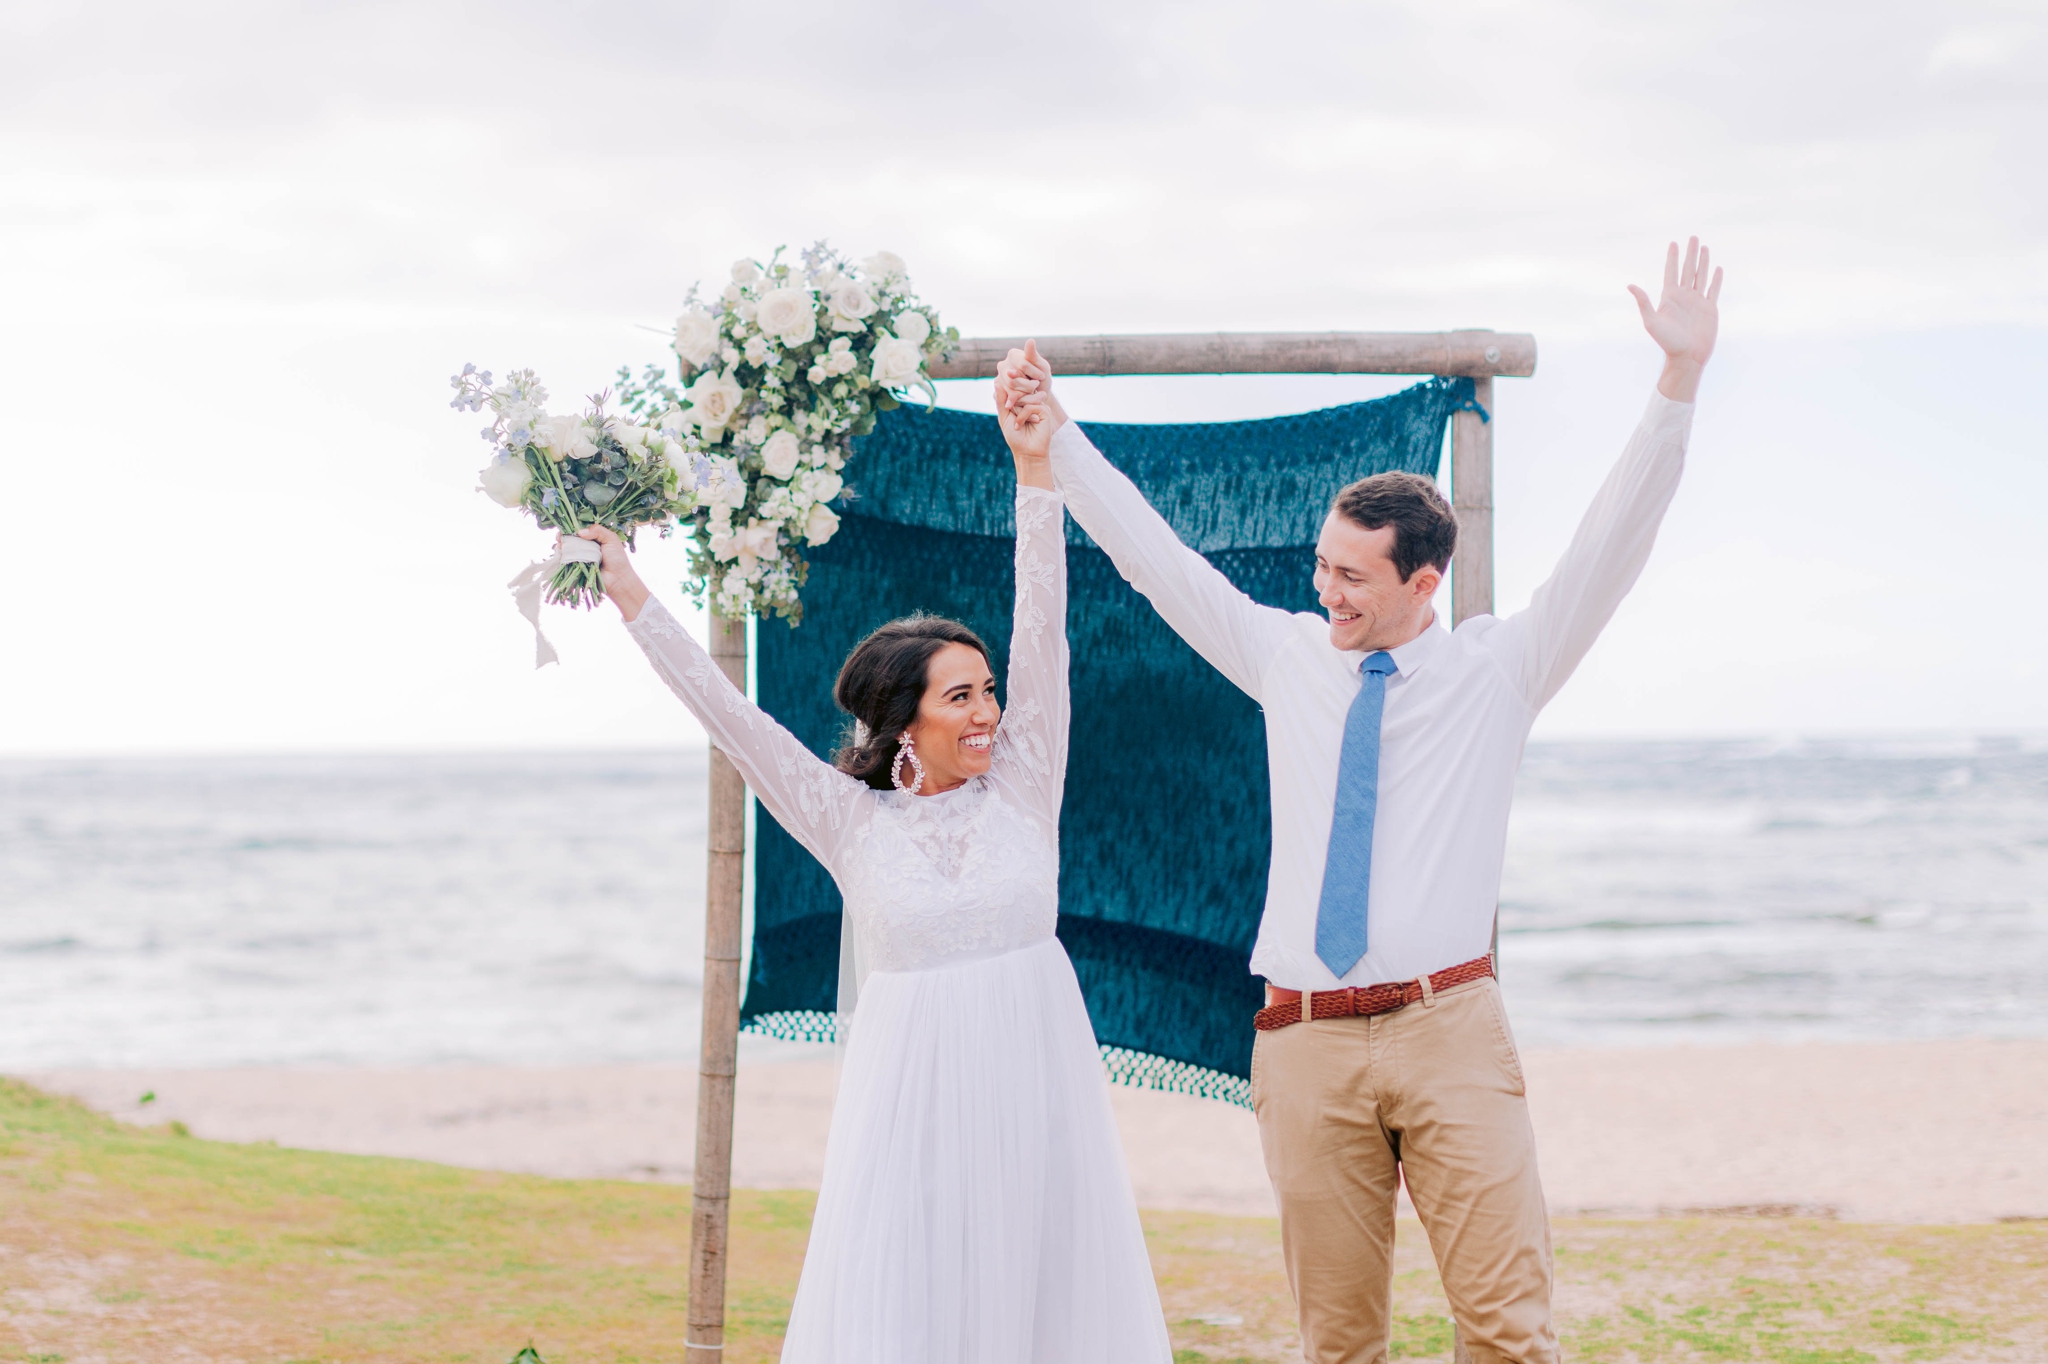 Bride and Groom cheering at the ceremony at the beach - Ana + Elijah - Wedding at Loulu Palm in Haleiwa, HI - Oahu Hawaii Wedding Photographer 